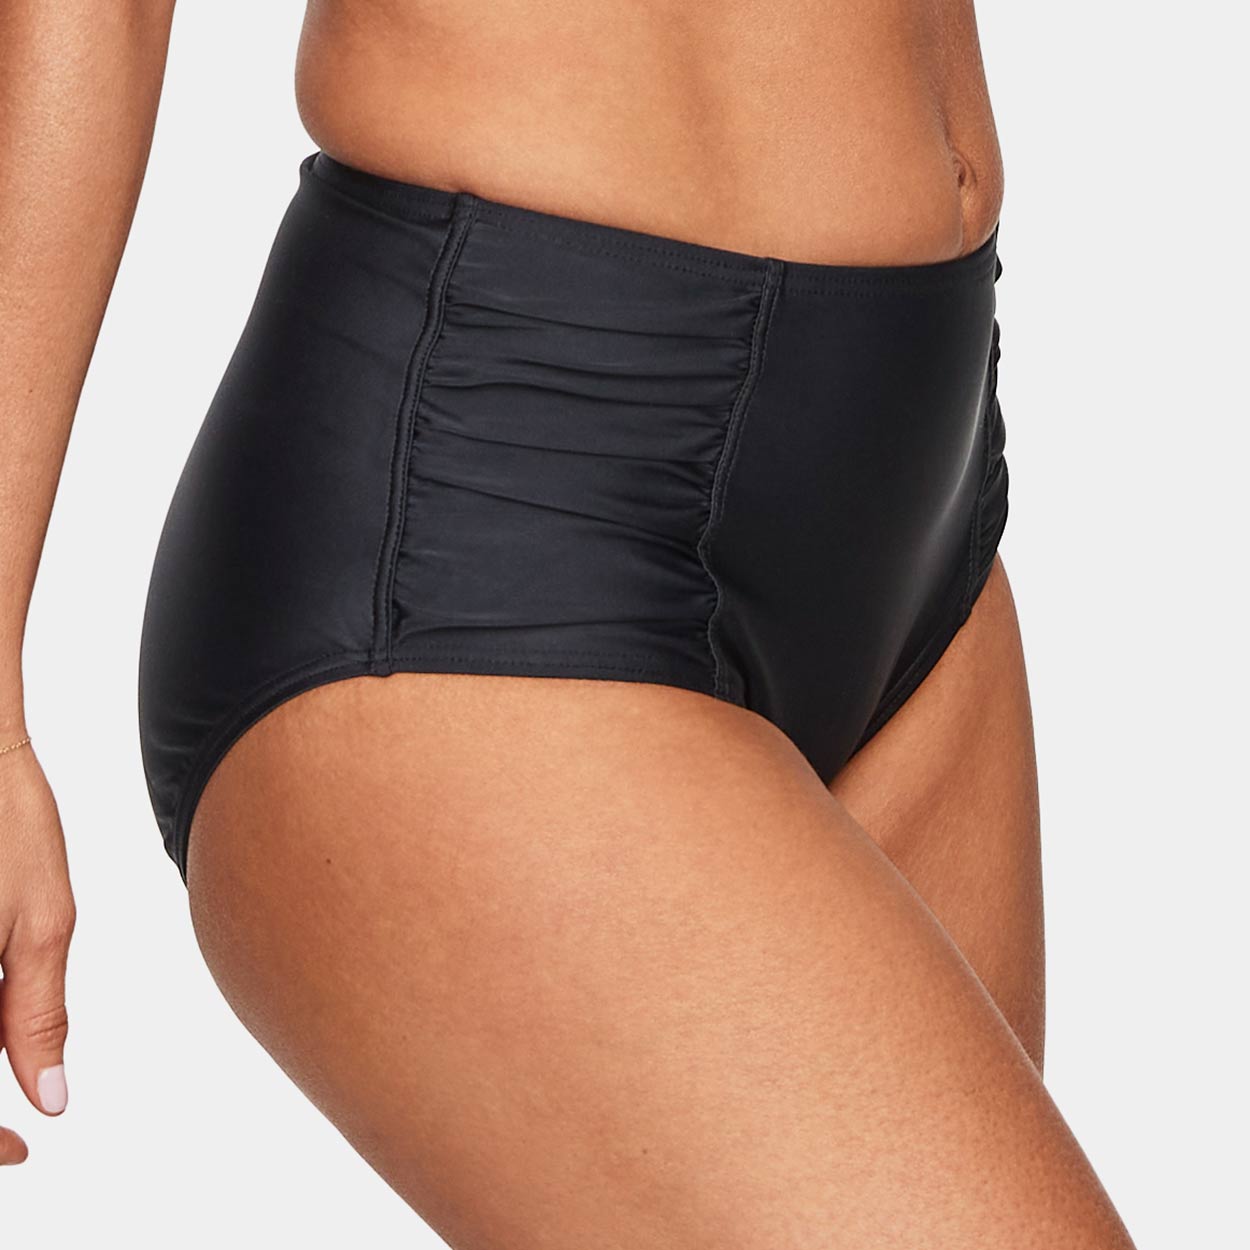 Abecita Bikini-Maxislip Modell Capri in Farbe schwarz am Modell